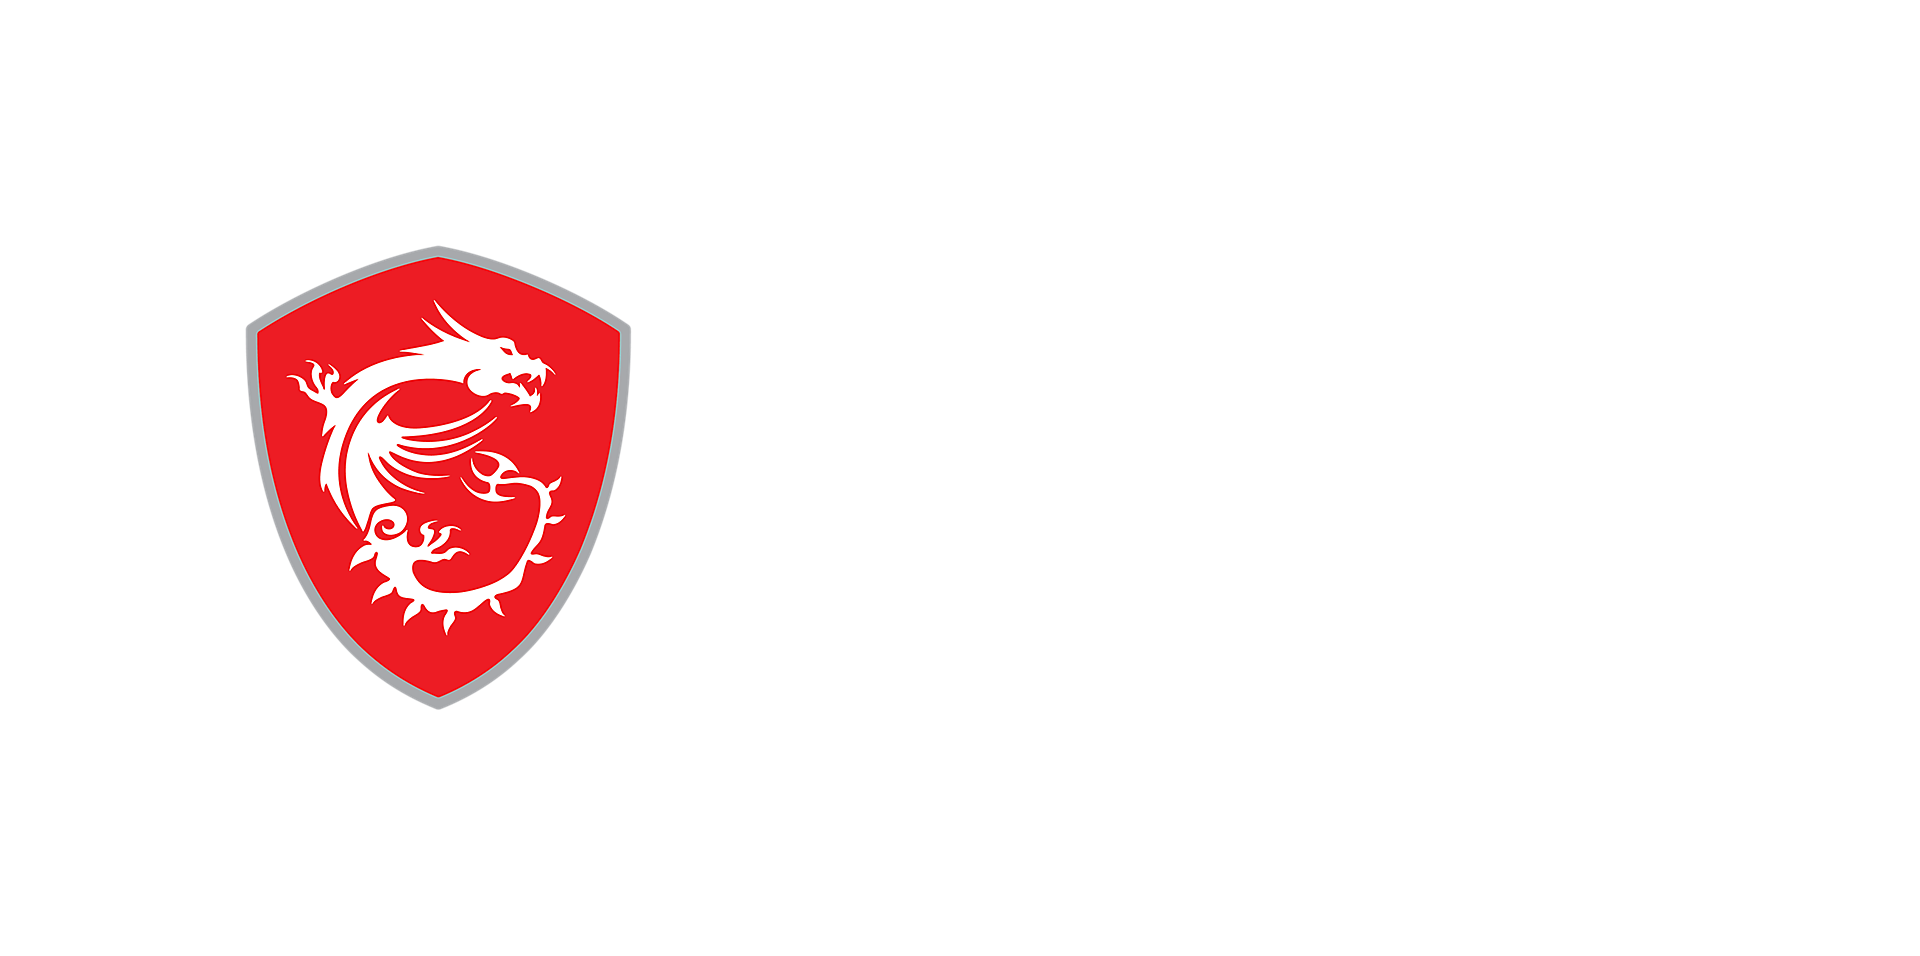 MSI Logo